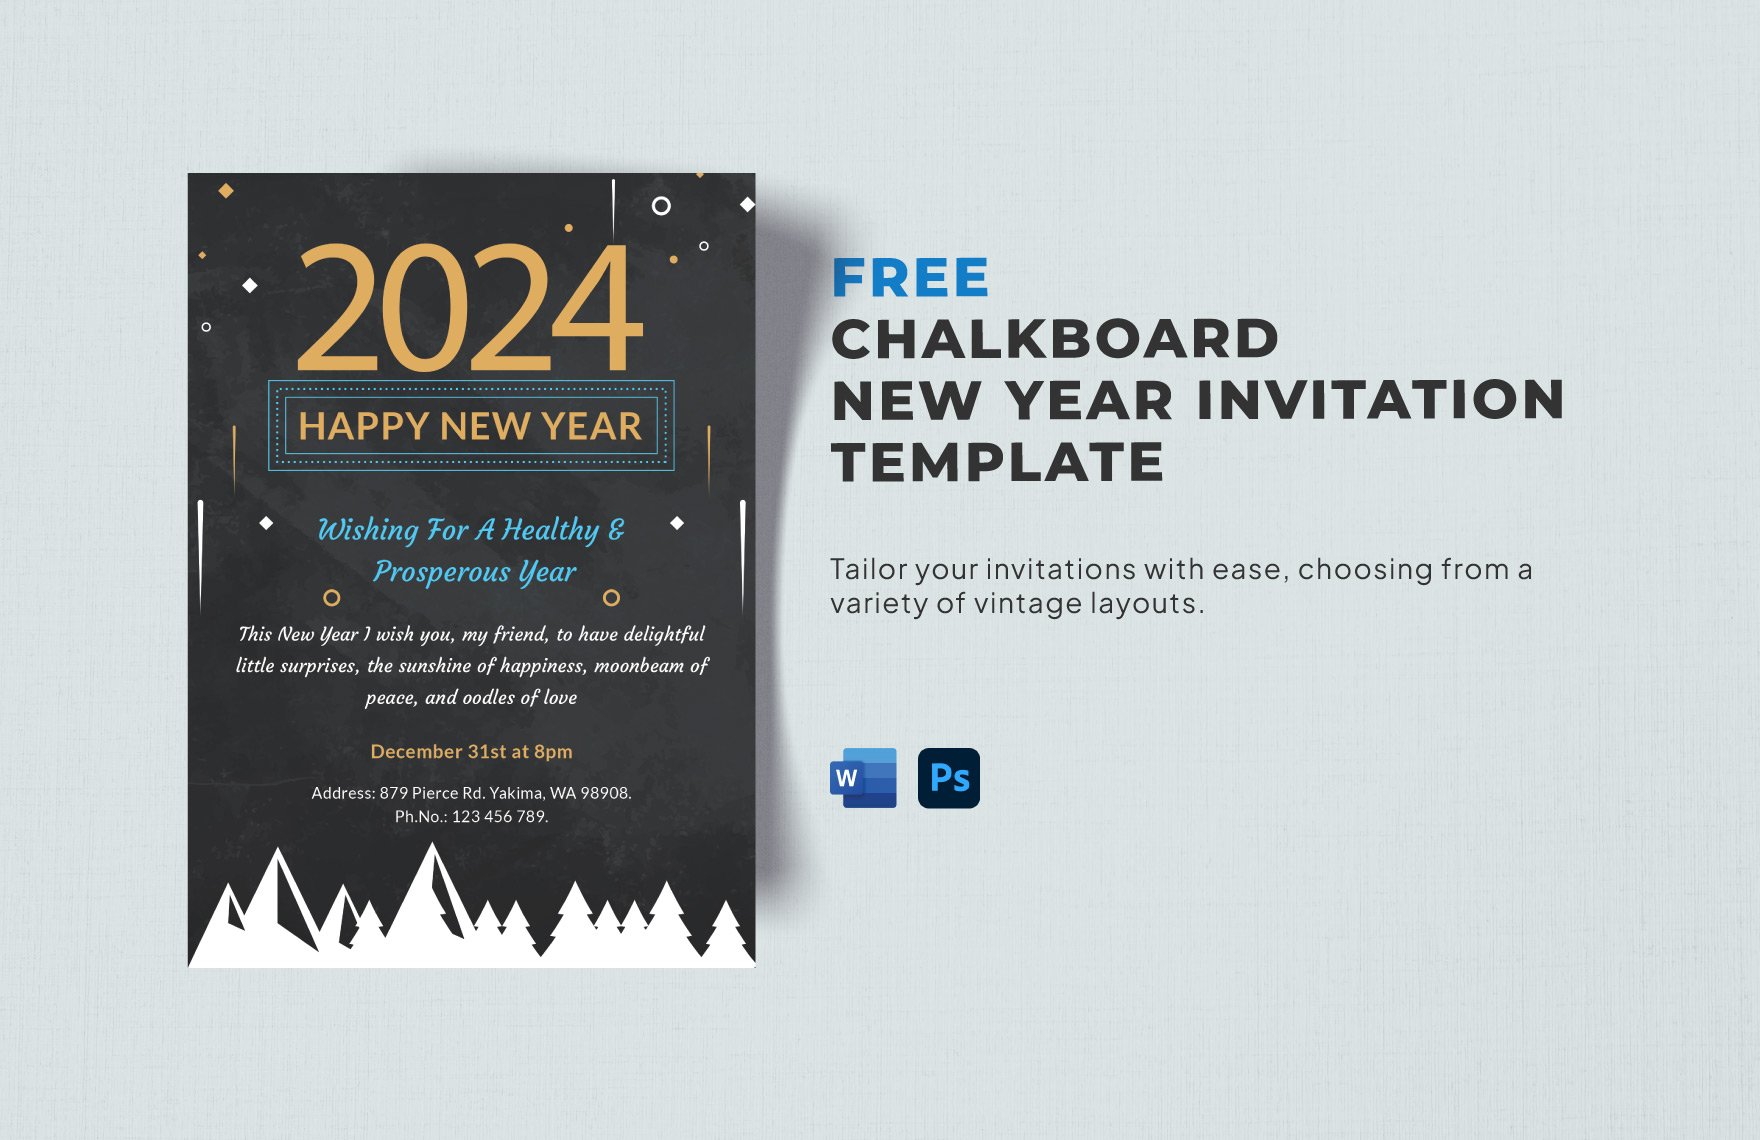 Chalkboard New Year Invitation Template